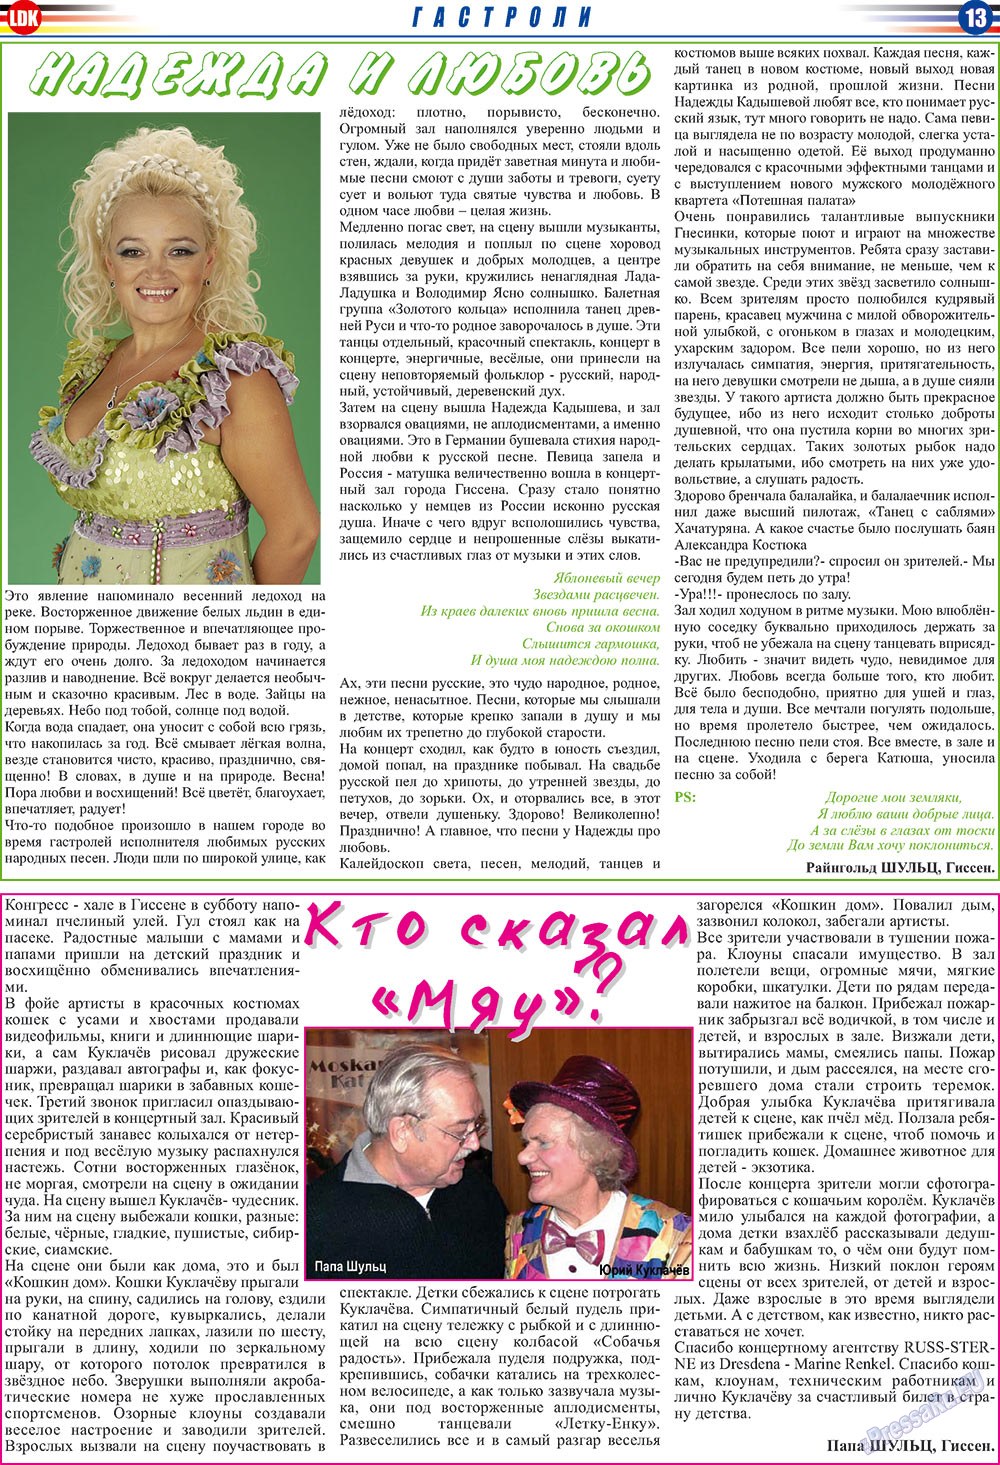 LDK по-русски, газета. 2009 №12 стр.13